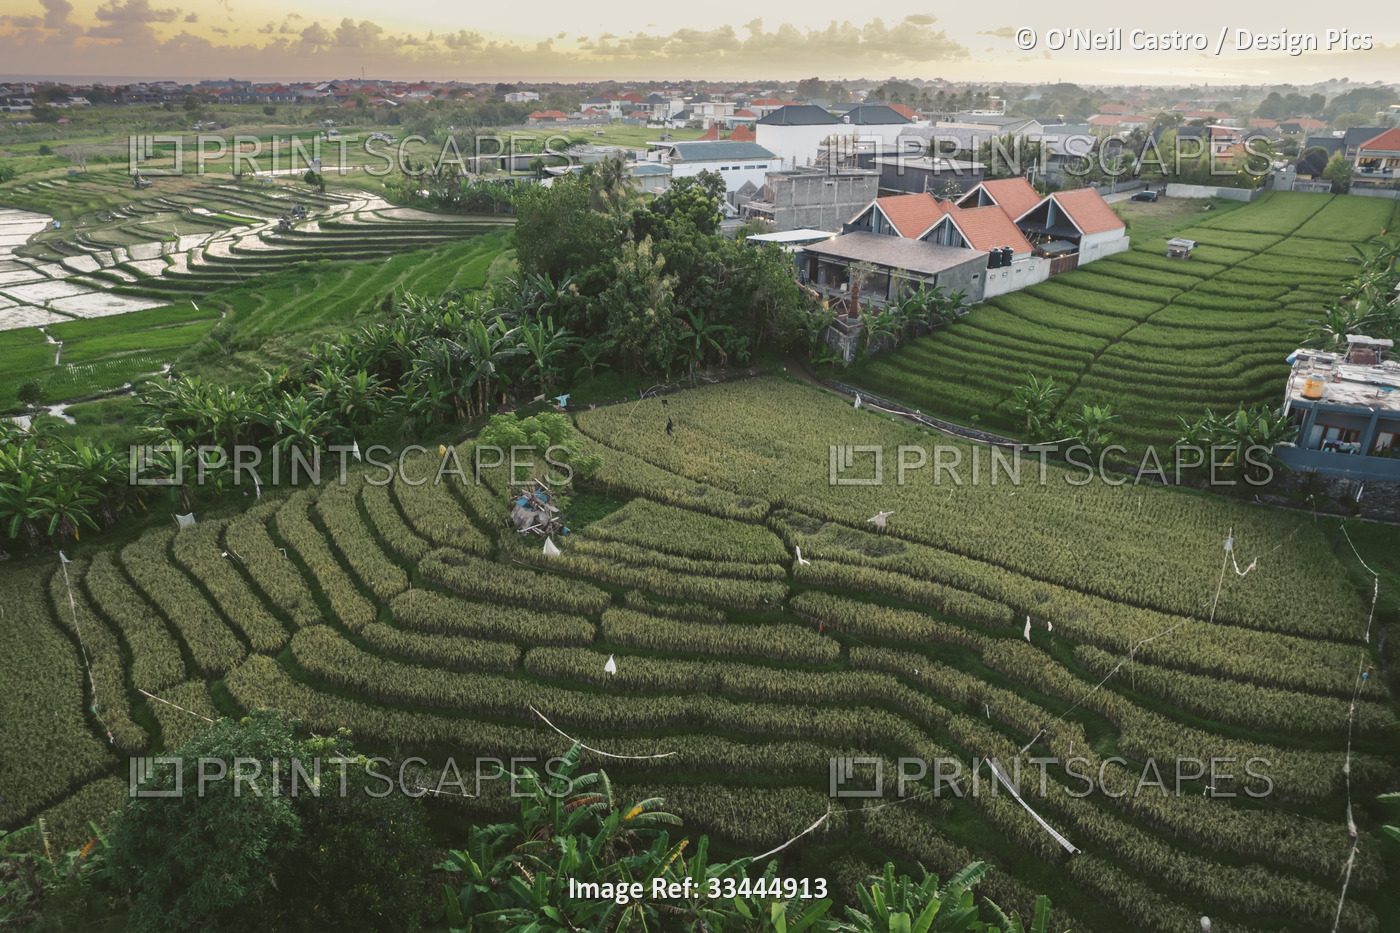 Terraced farming and farm buildings; Canggu, Bali, Indonesia